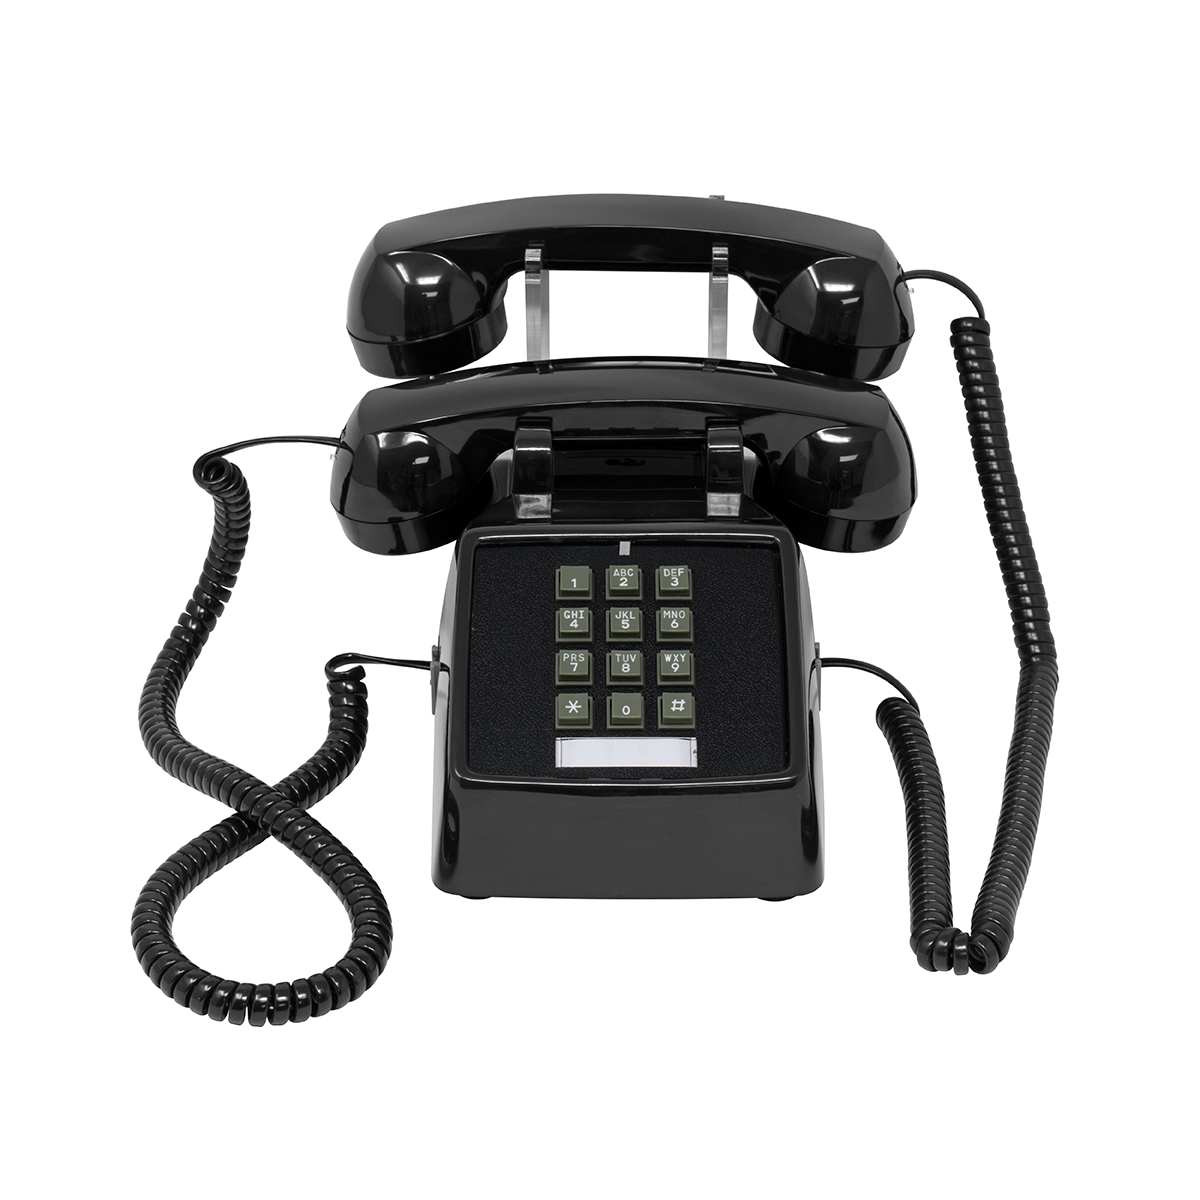  Black 2500 Consultation Desk Phone (Front View)